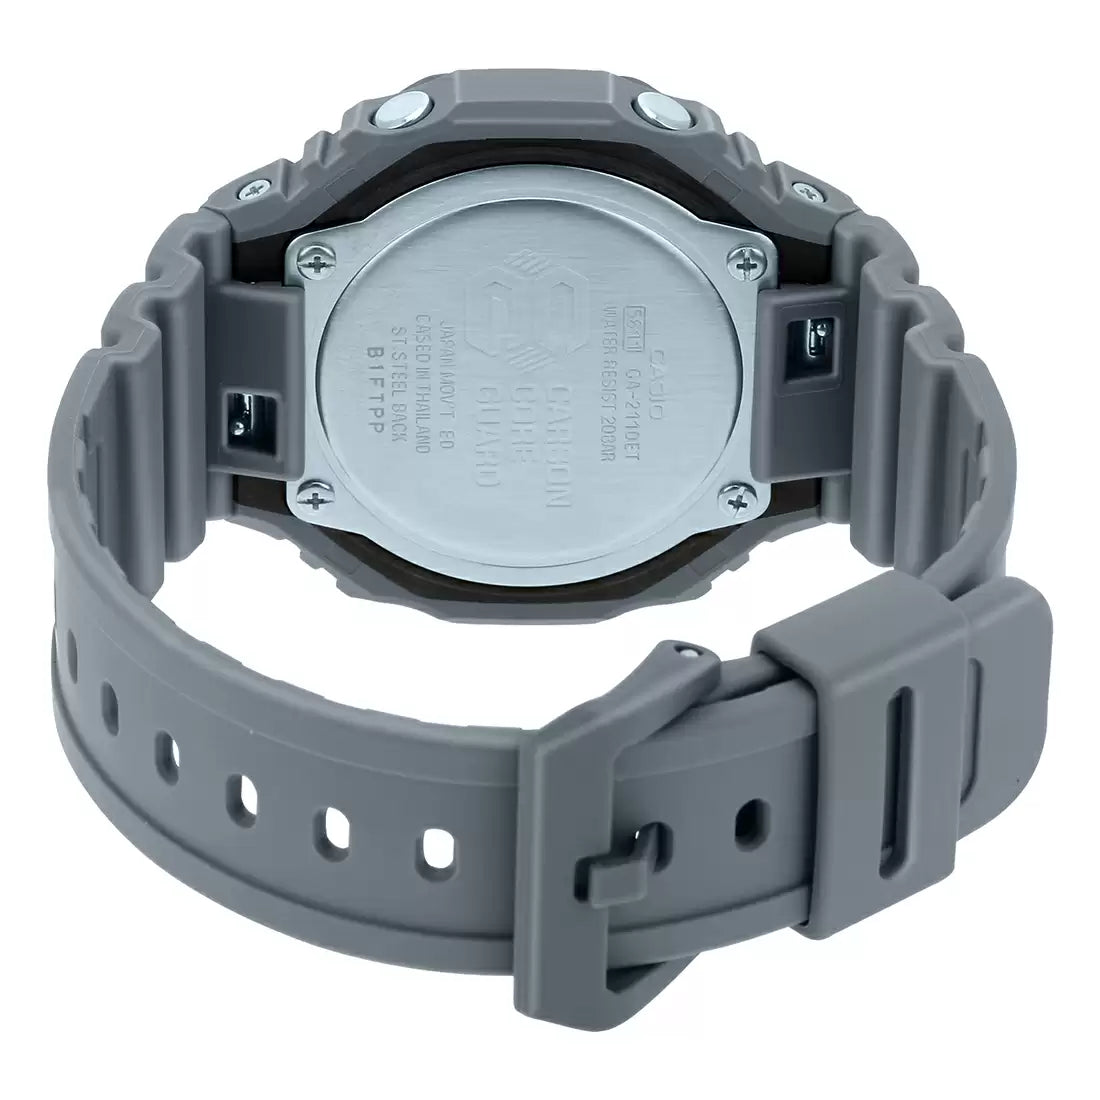 G-Shock Carbon Core Guard Grey